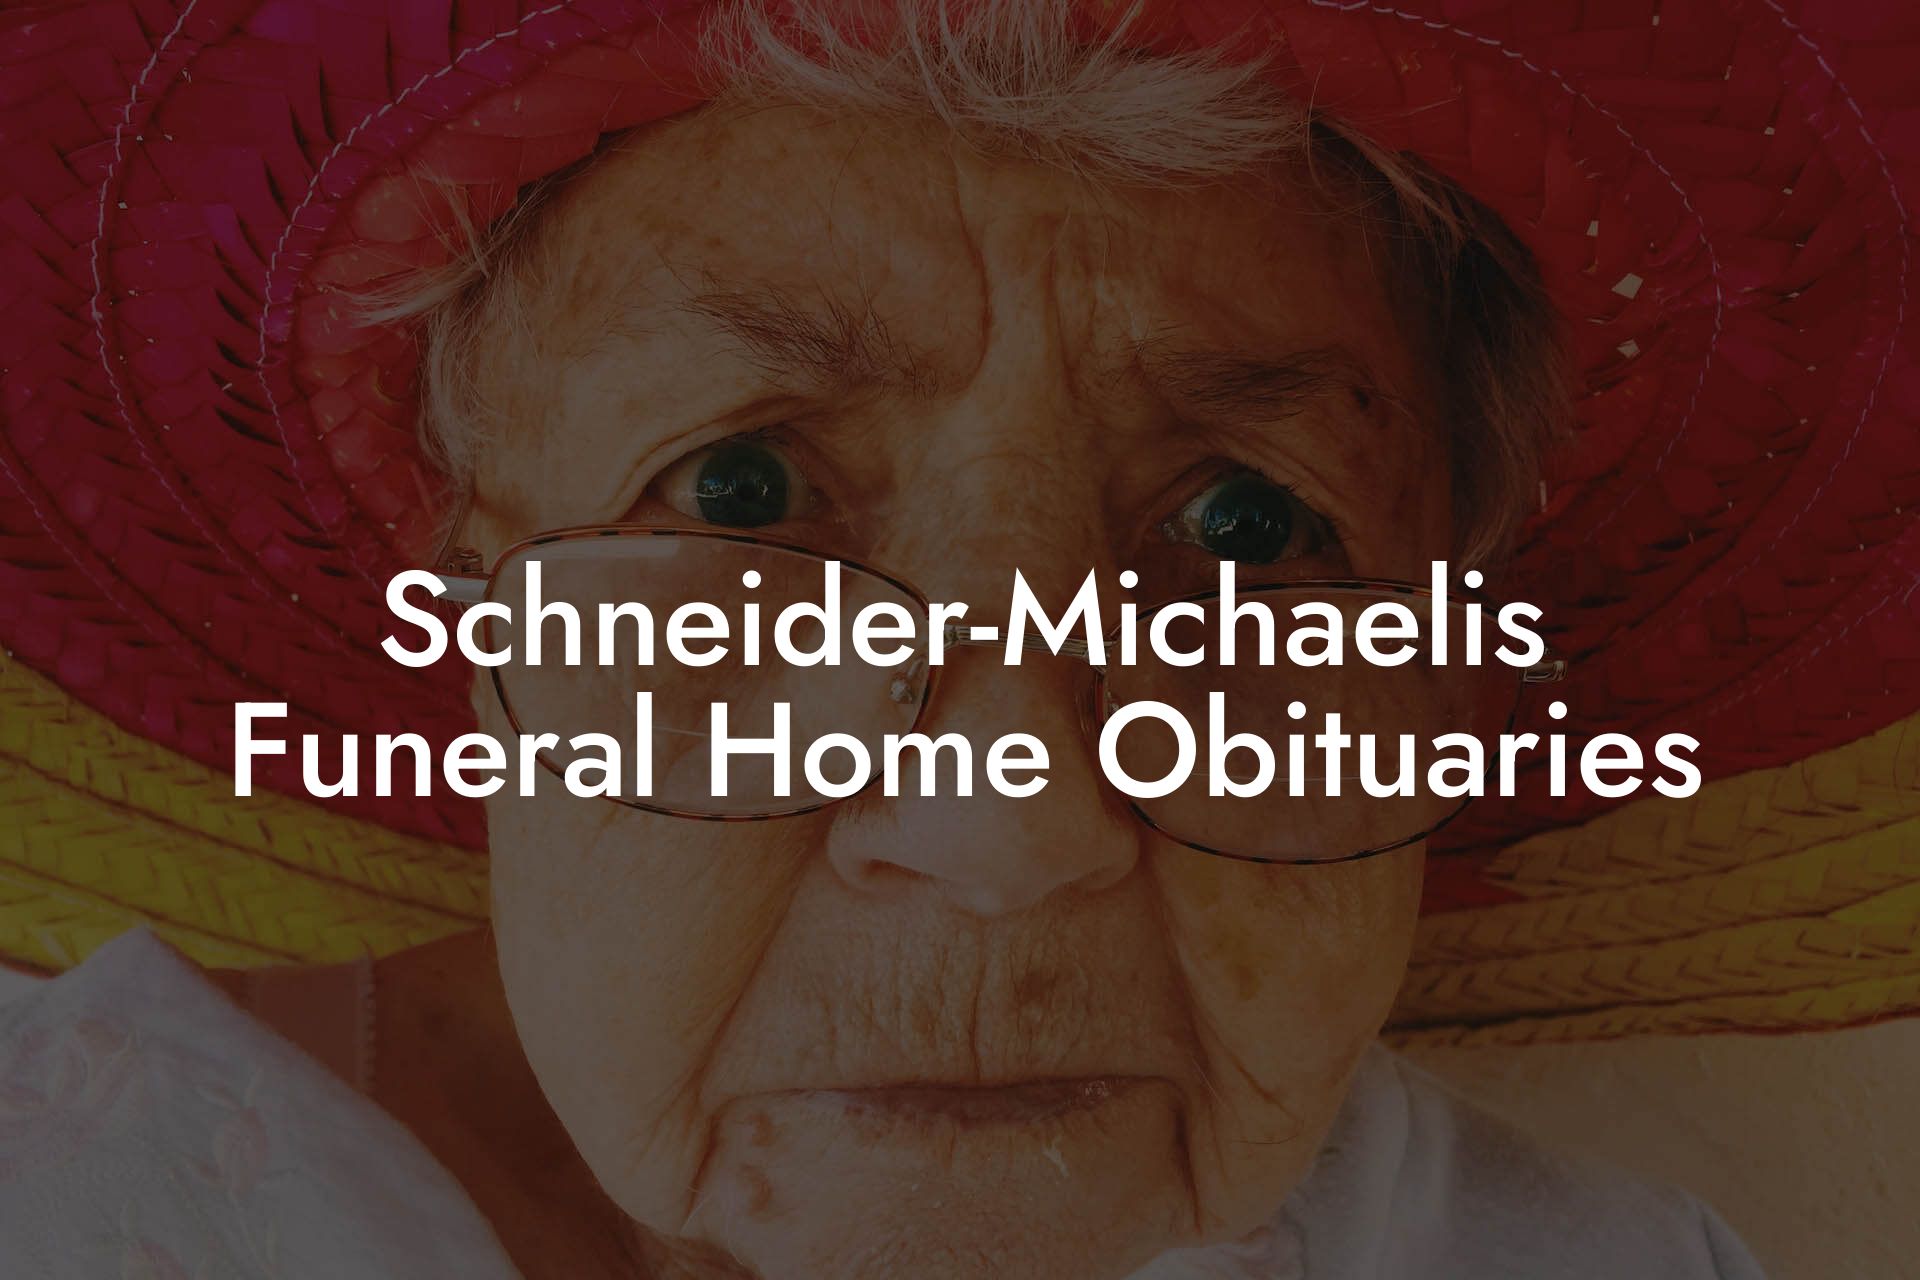 Schneider-Michaelis Funeral Home Obituaries